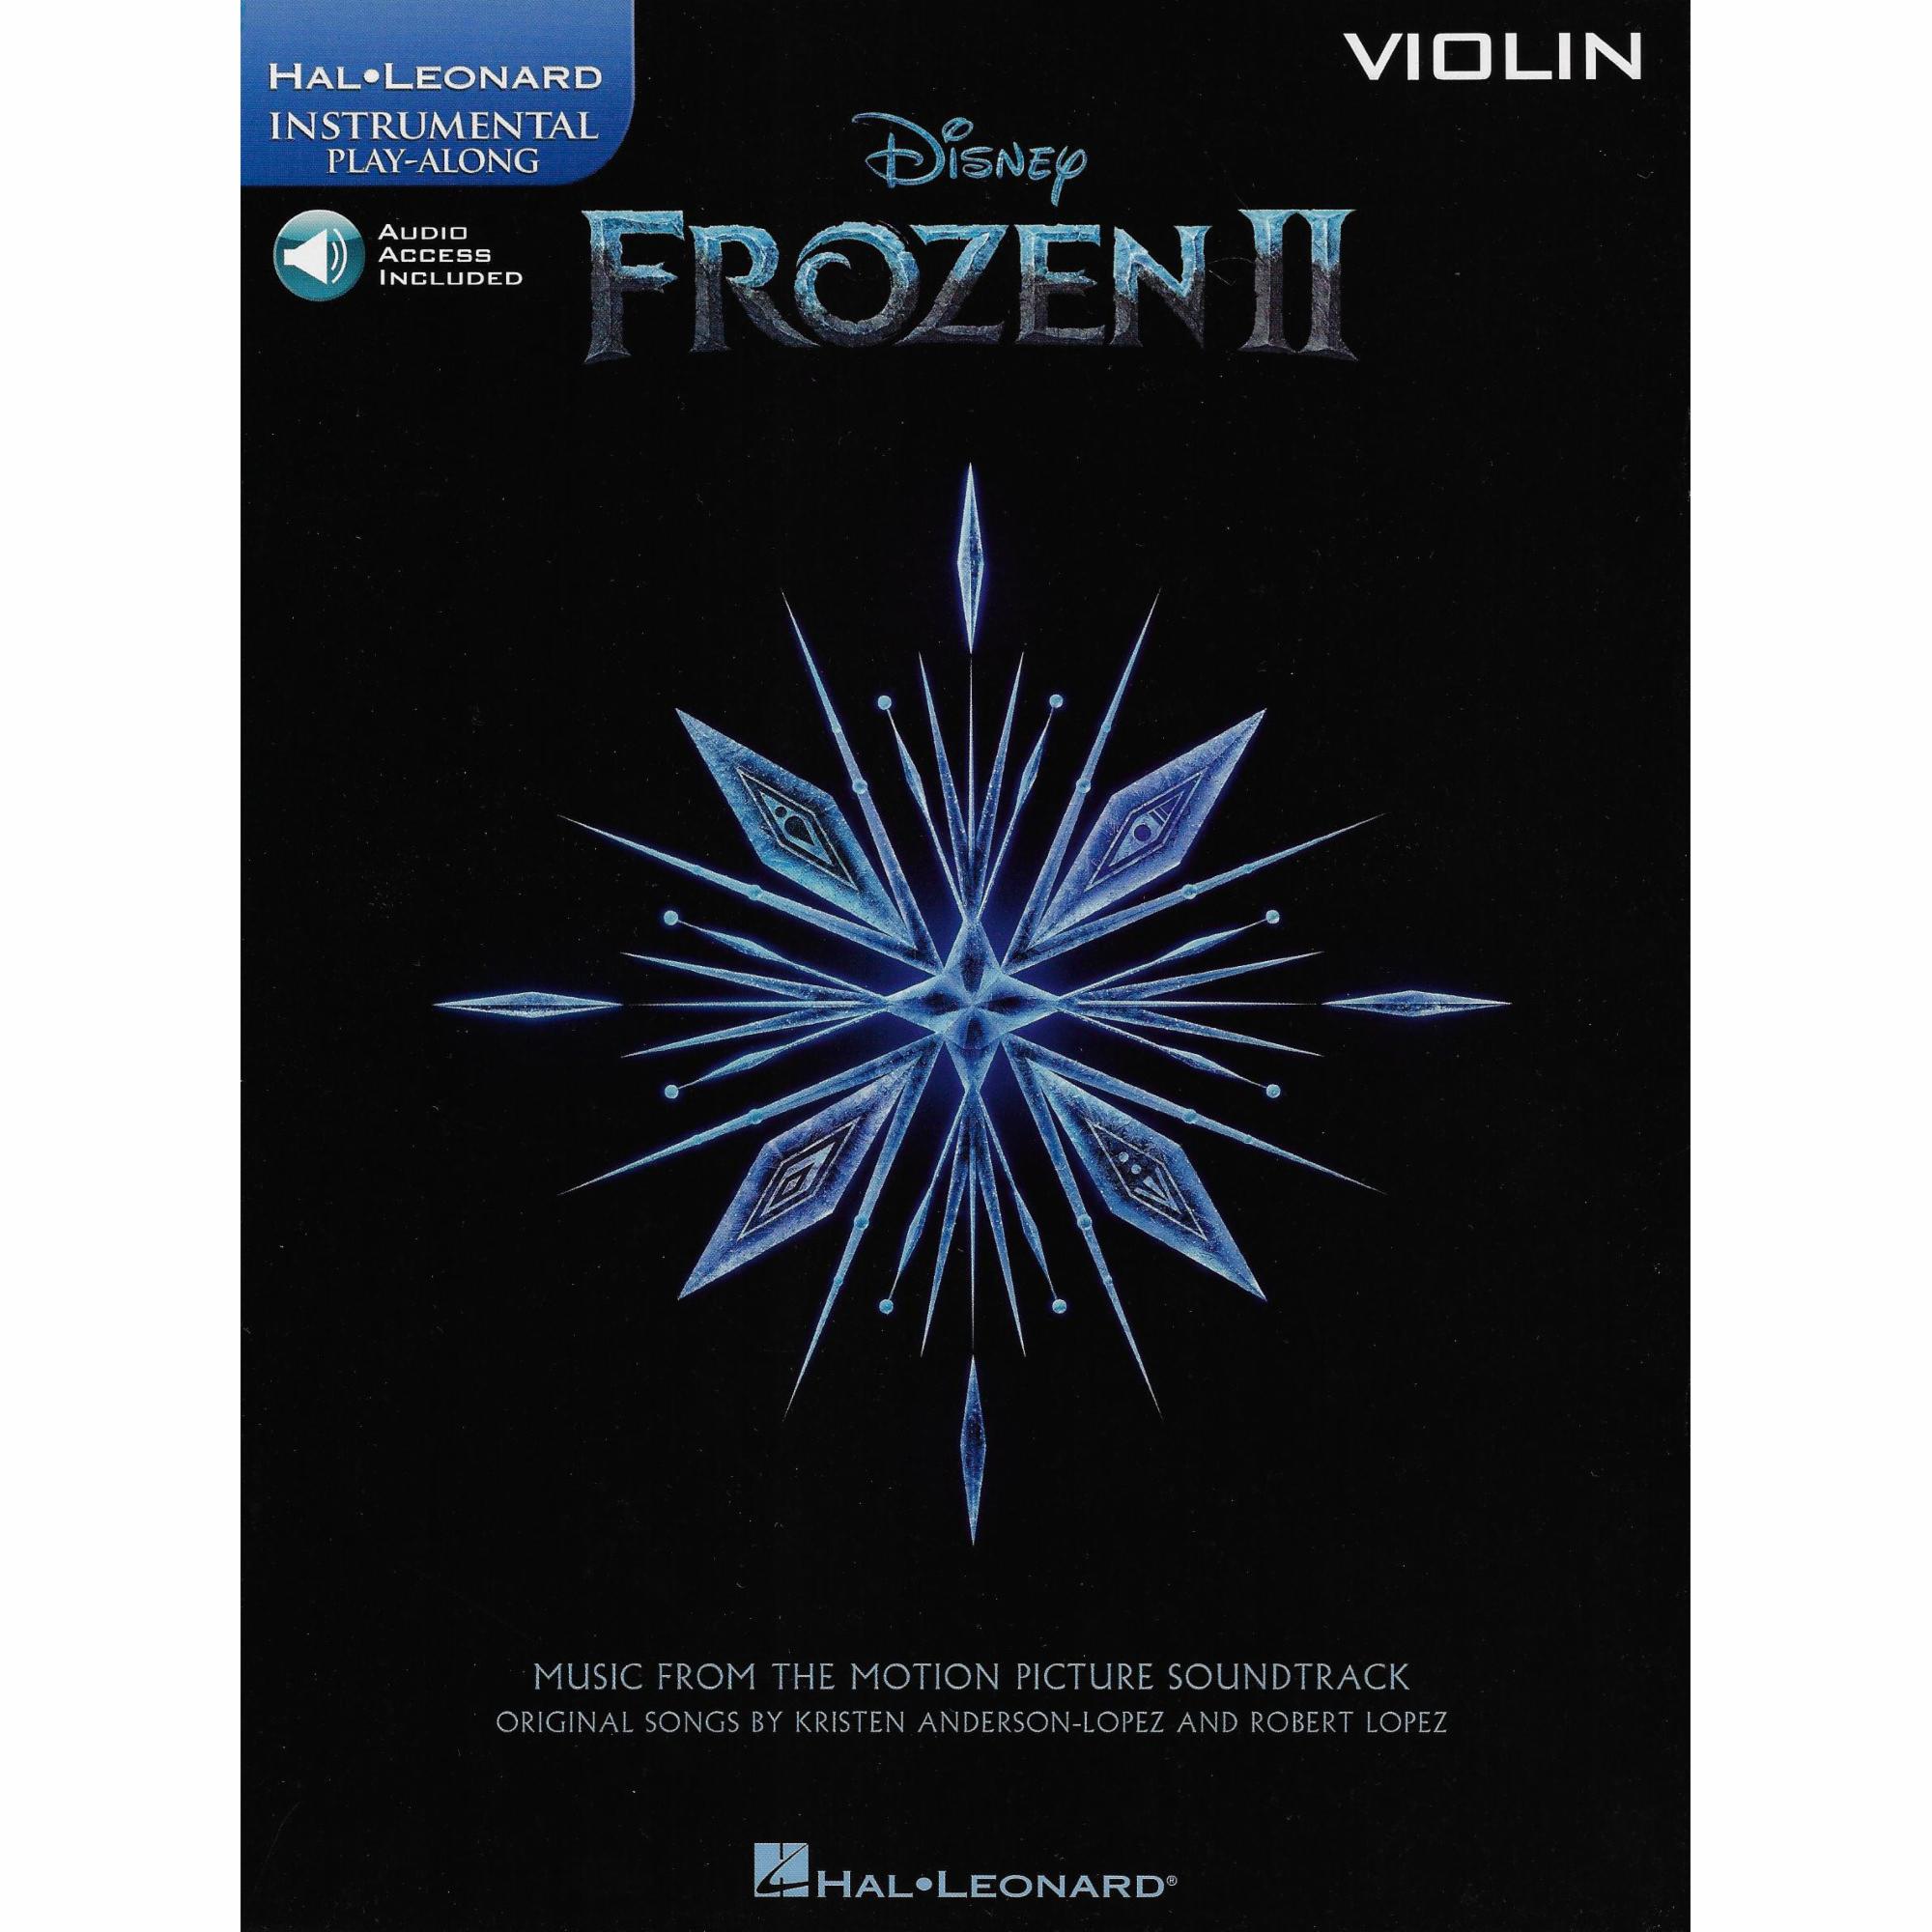 Frozen II for Violin, Viola, or Cello